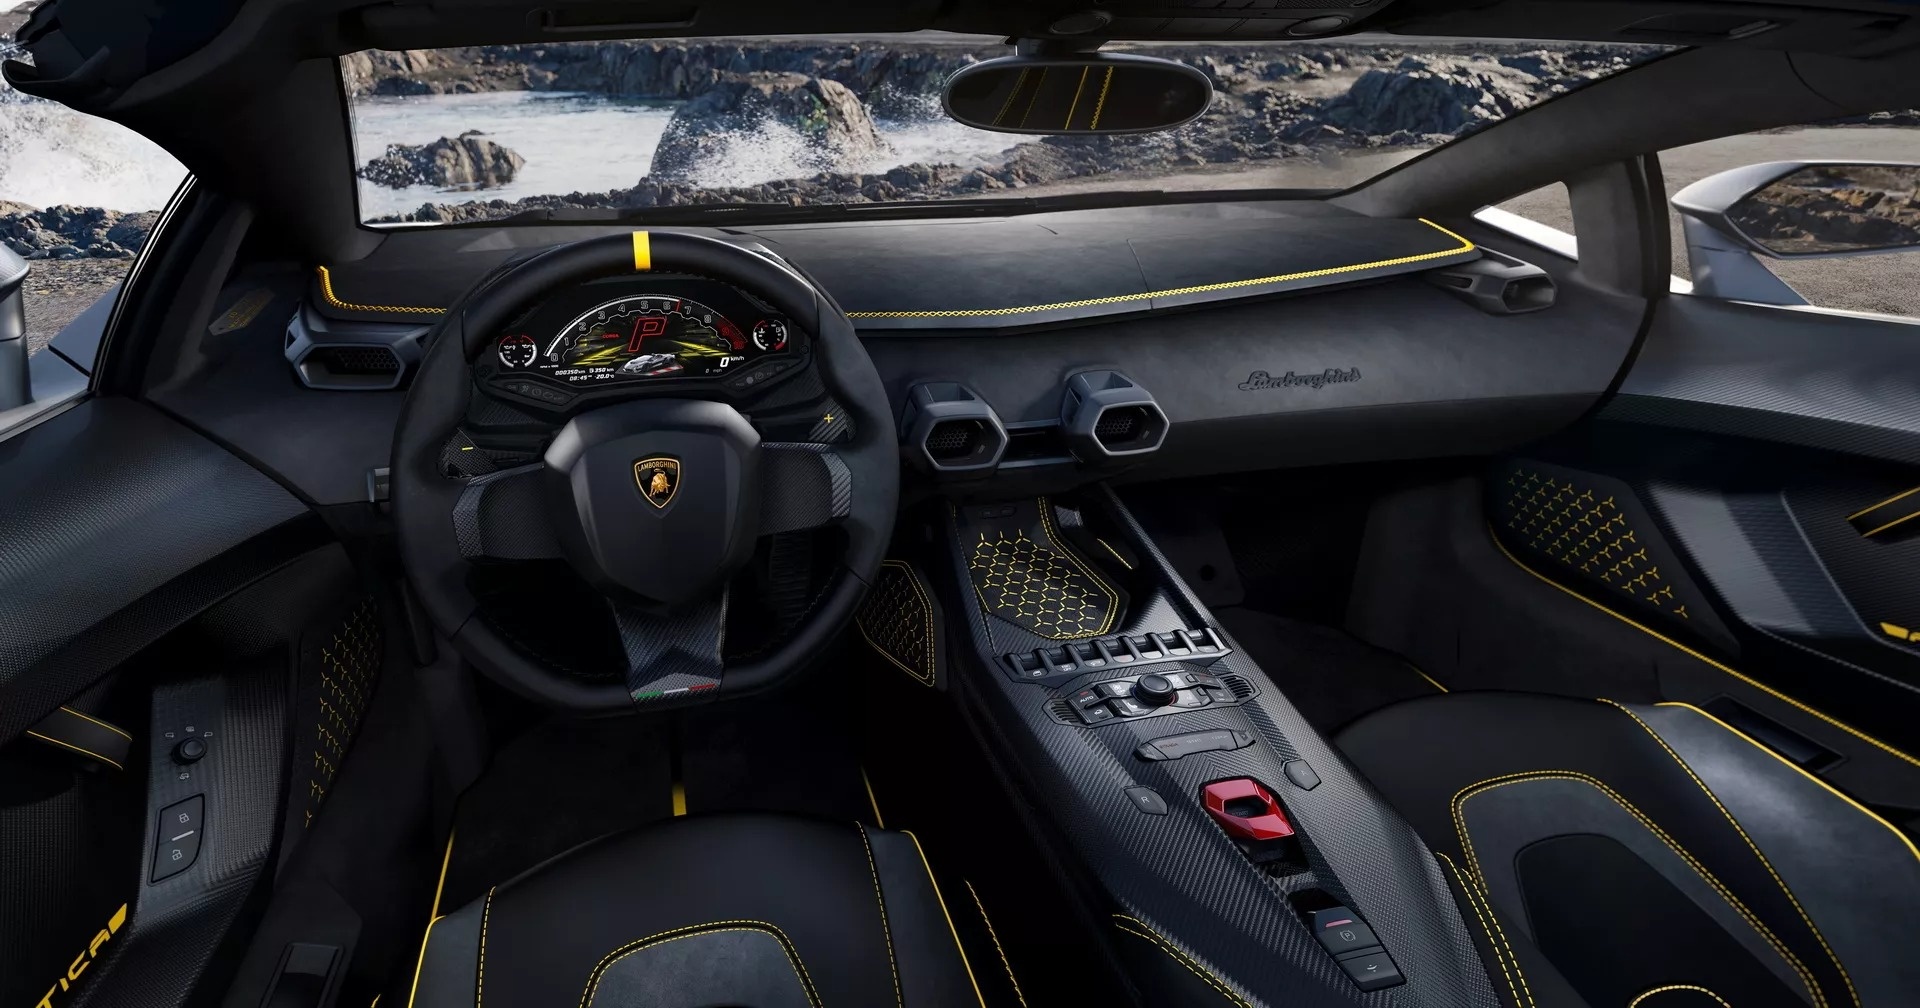 Chi tiết siêu xe Lamborghini Invencible và Autentica vừa ra mắt - ảnh 6